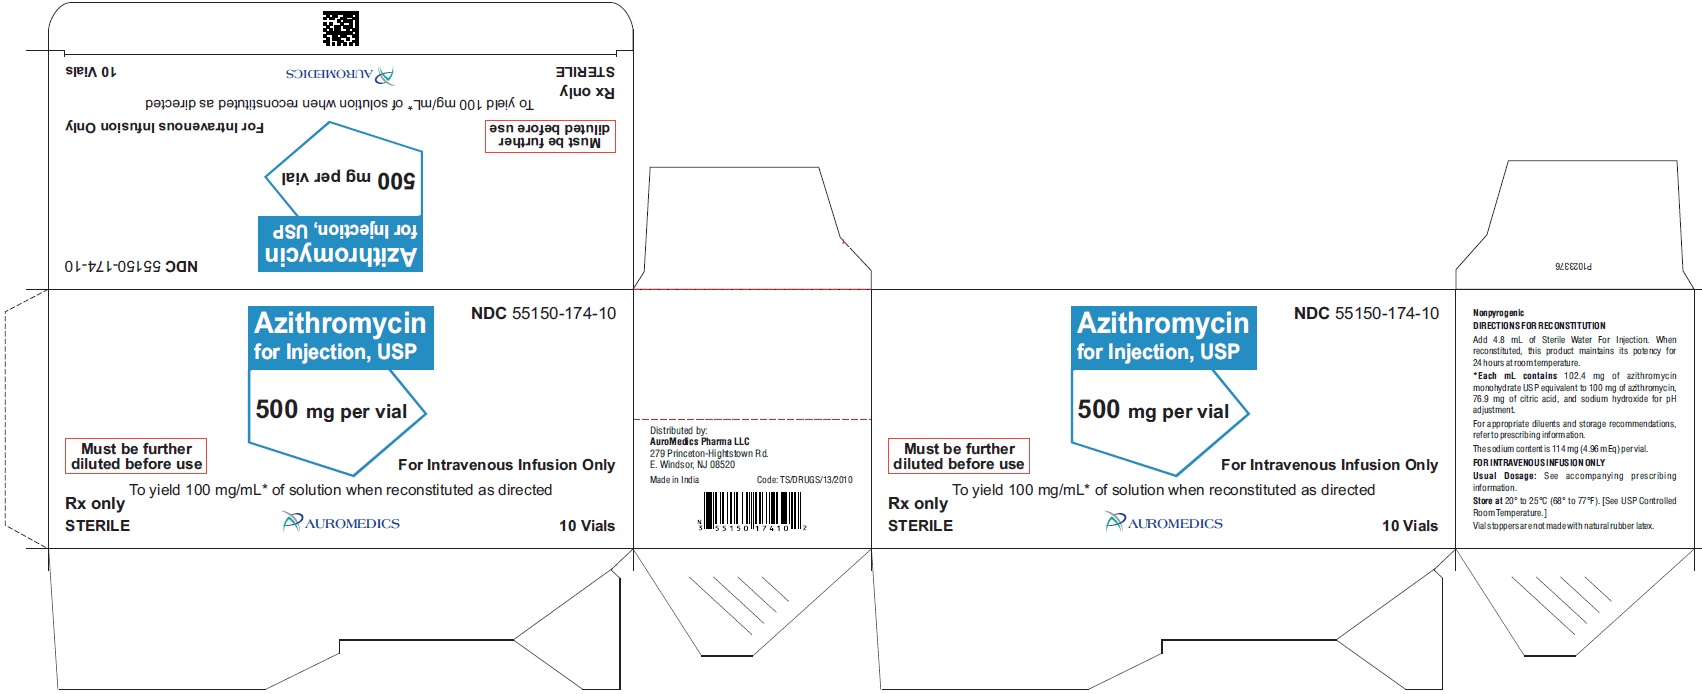 PACKAGE LABEL-PRINCIPAL DISPLAY PANEL - 500 mg per vial - Container-Carton (10 Vials)